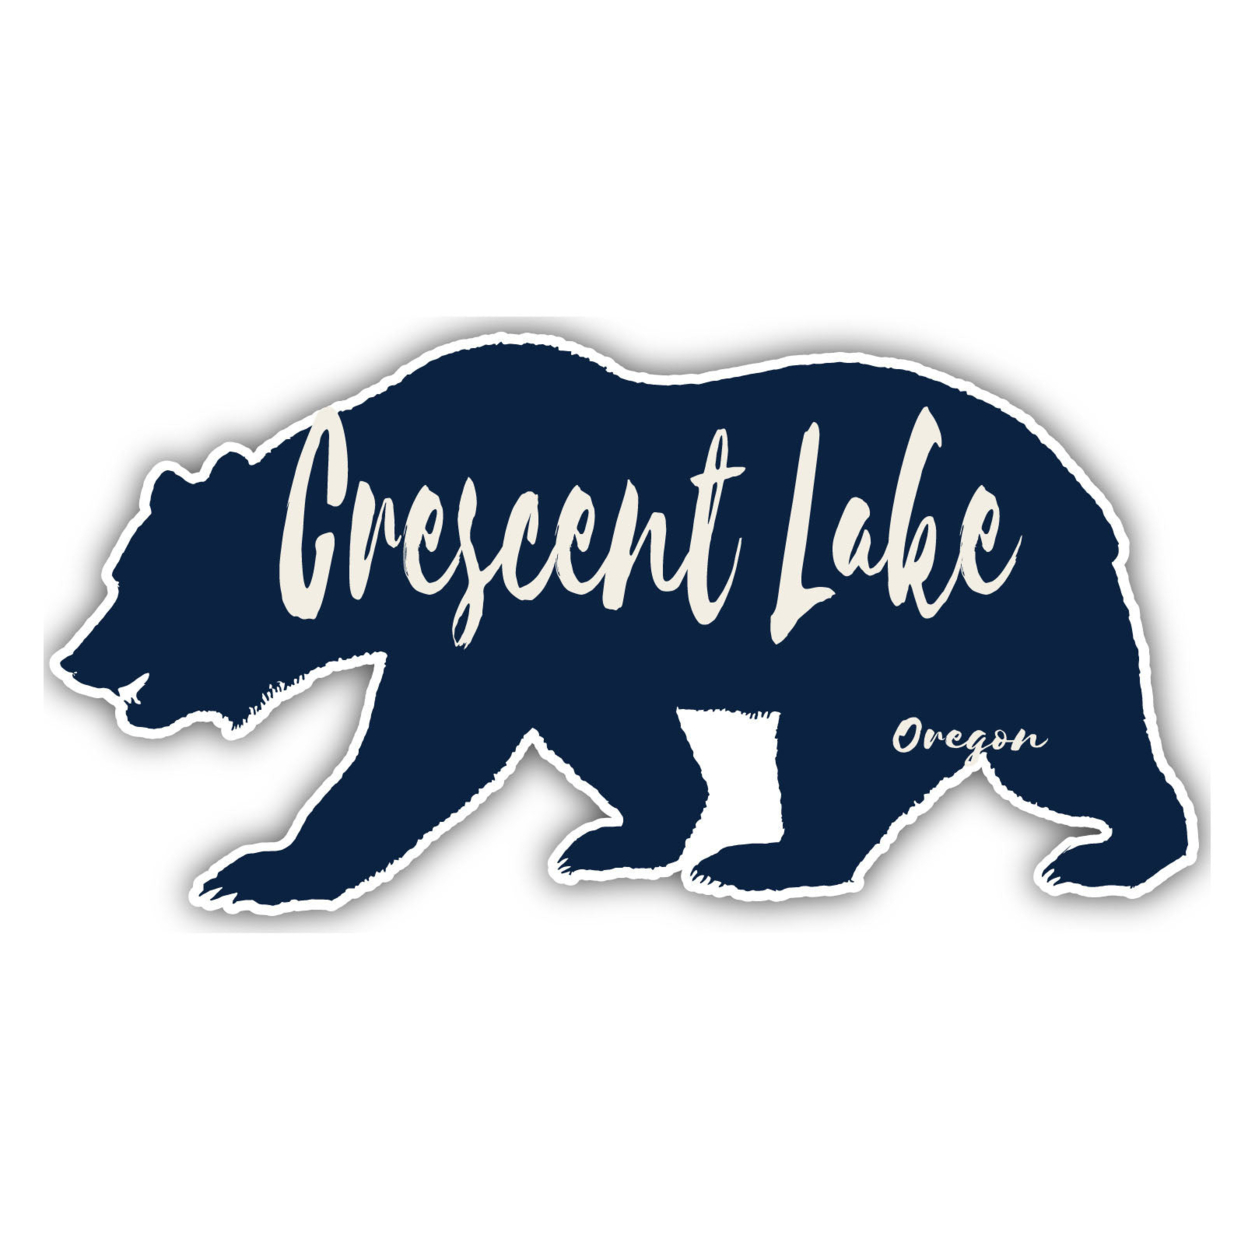 Crescent Lake Oregon Souvenir Decorative Stickers (Choose Theme And Size) - Single Unit, 4-Inch, Bear